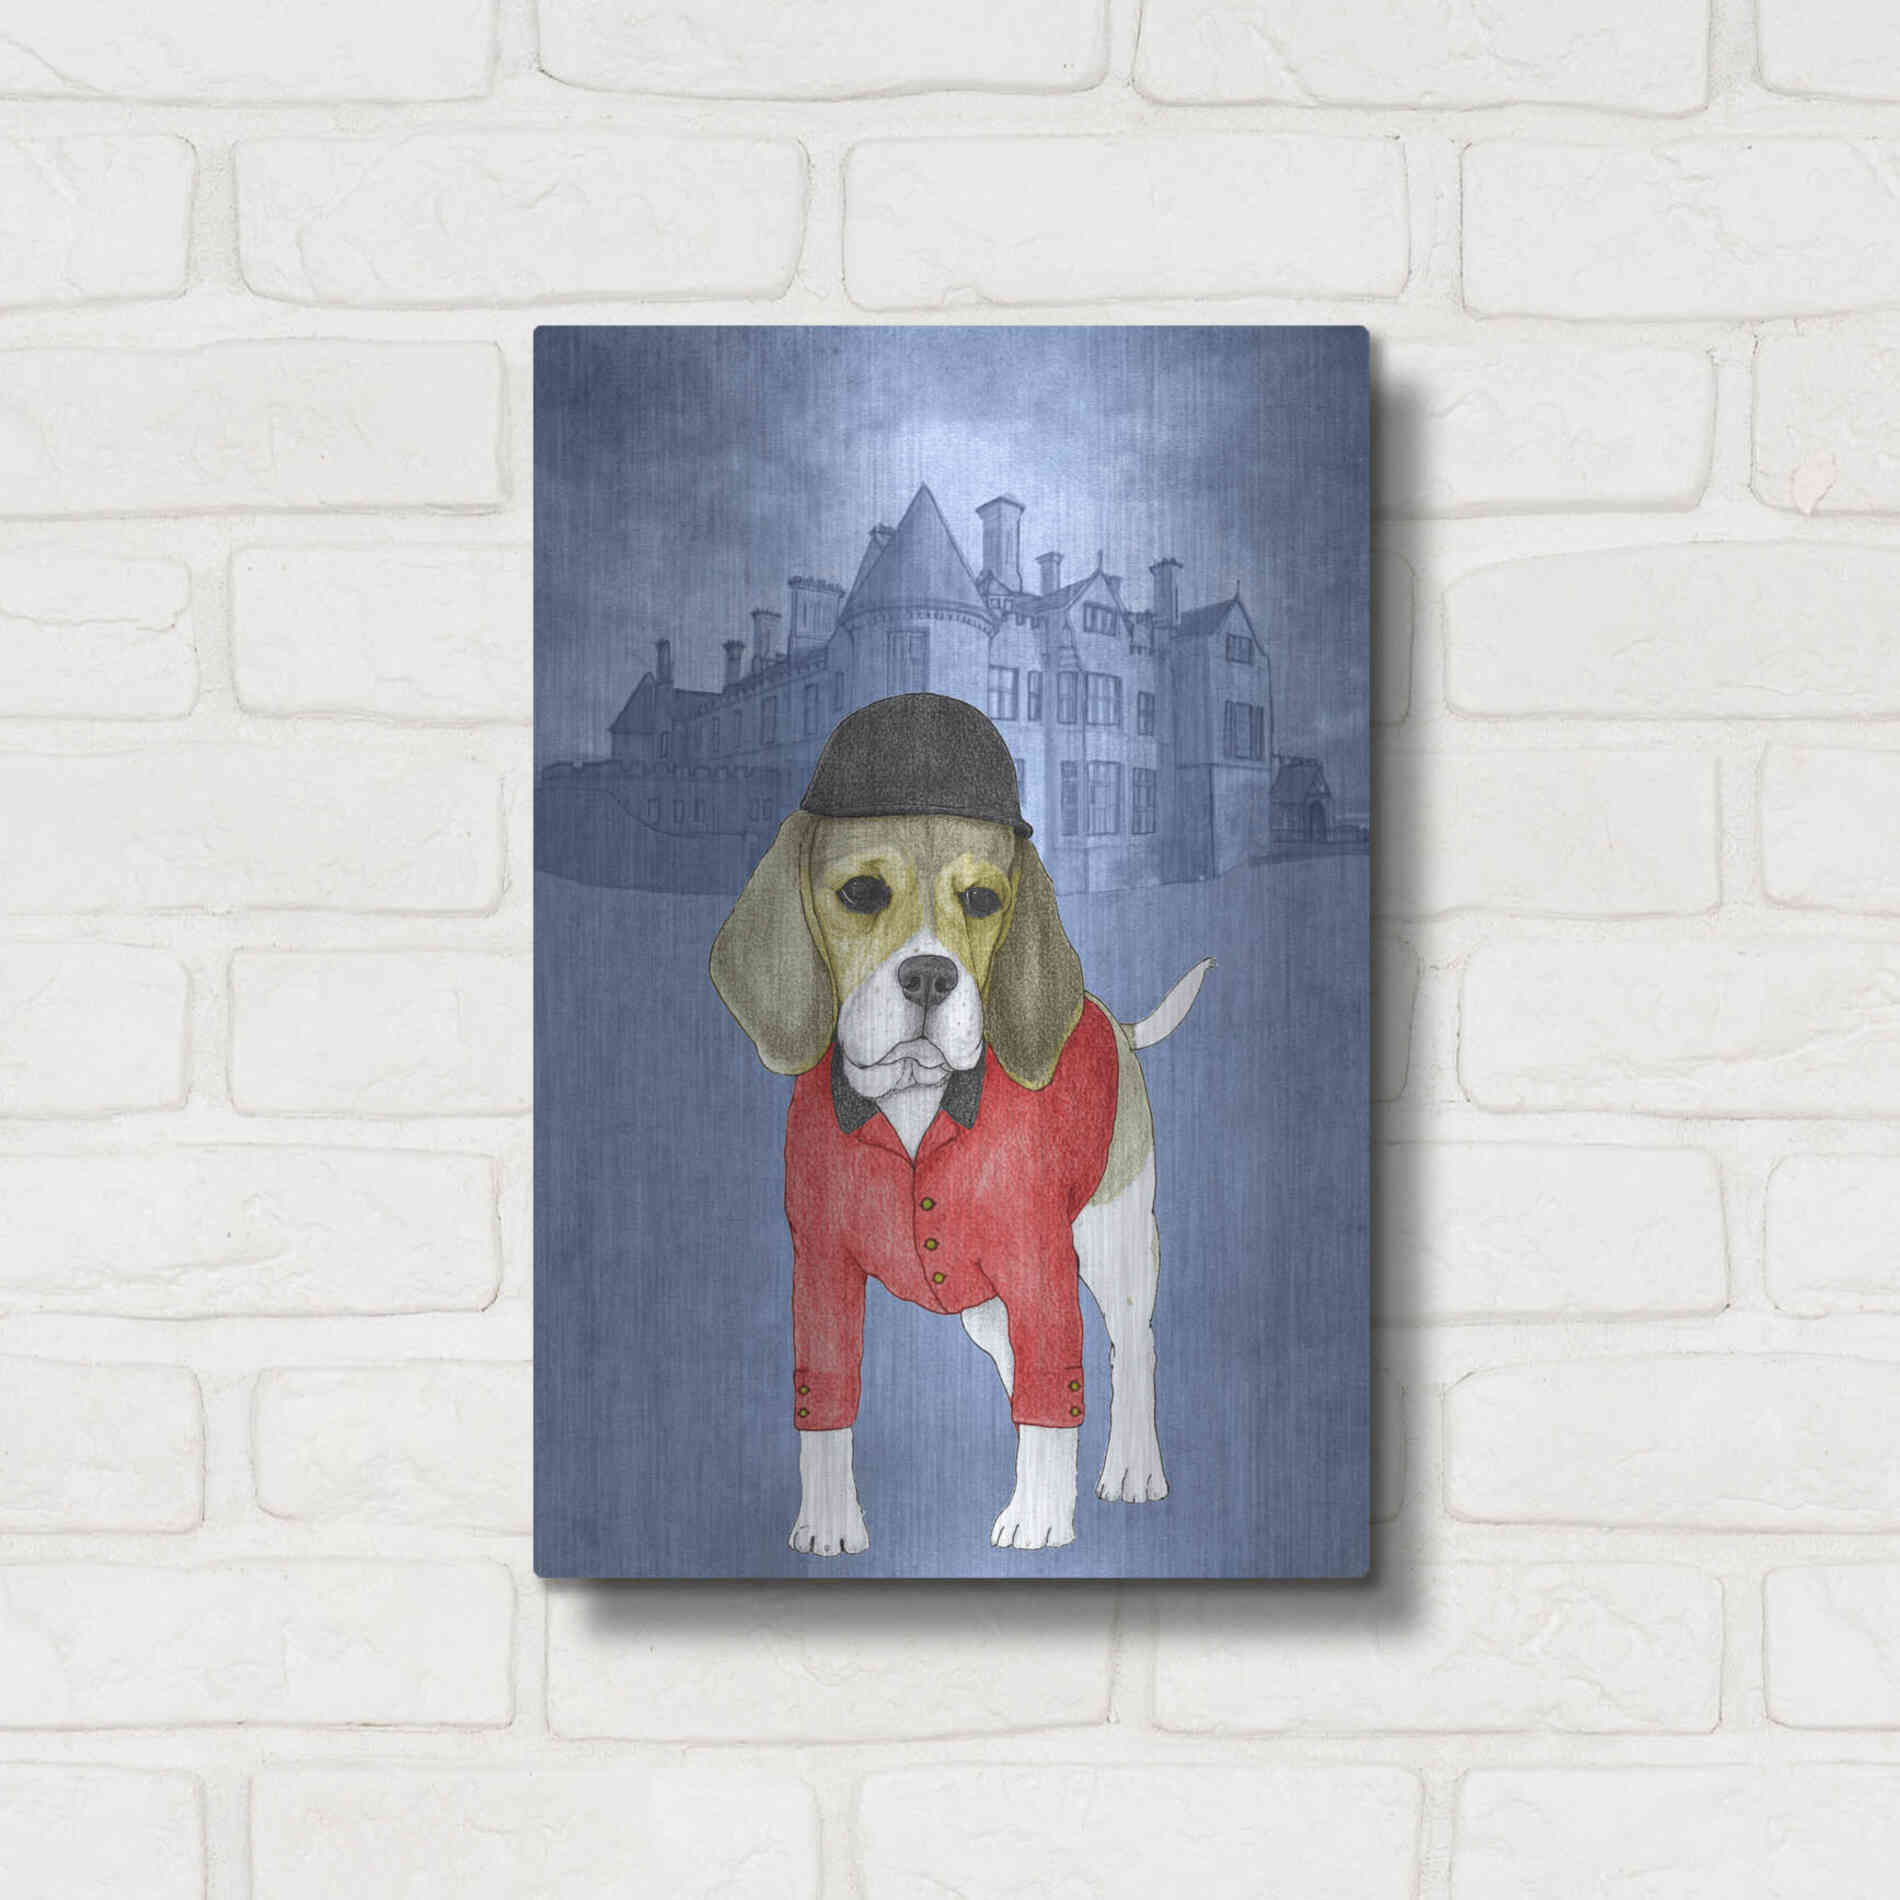 Luxe Metal Art 'Beagle with Beaulieu Palace' by Barruf Metal Wall Art,12x16